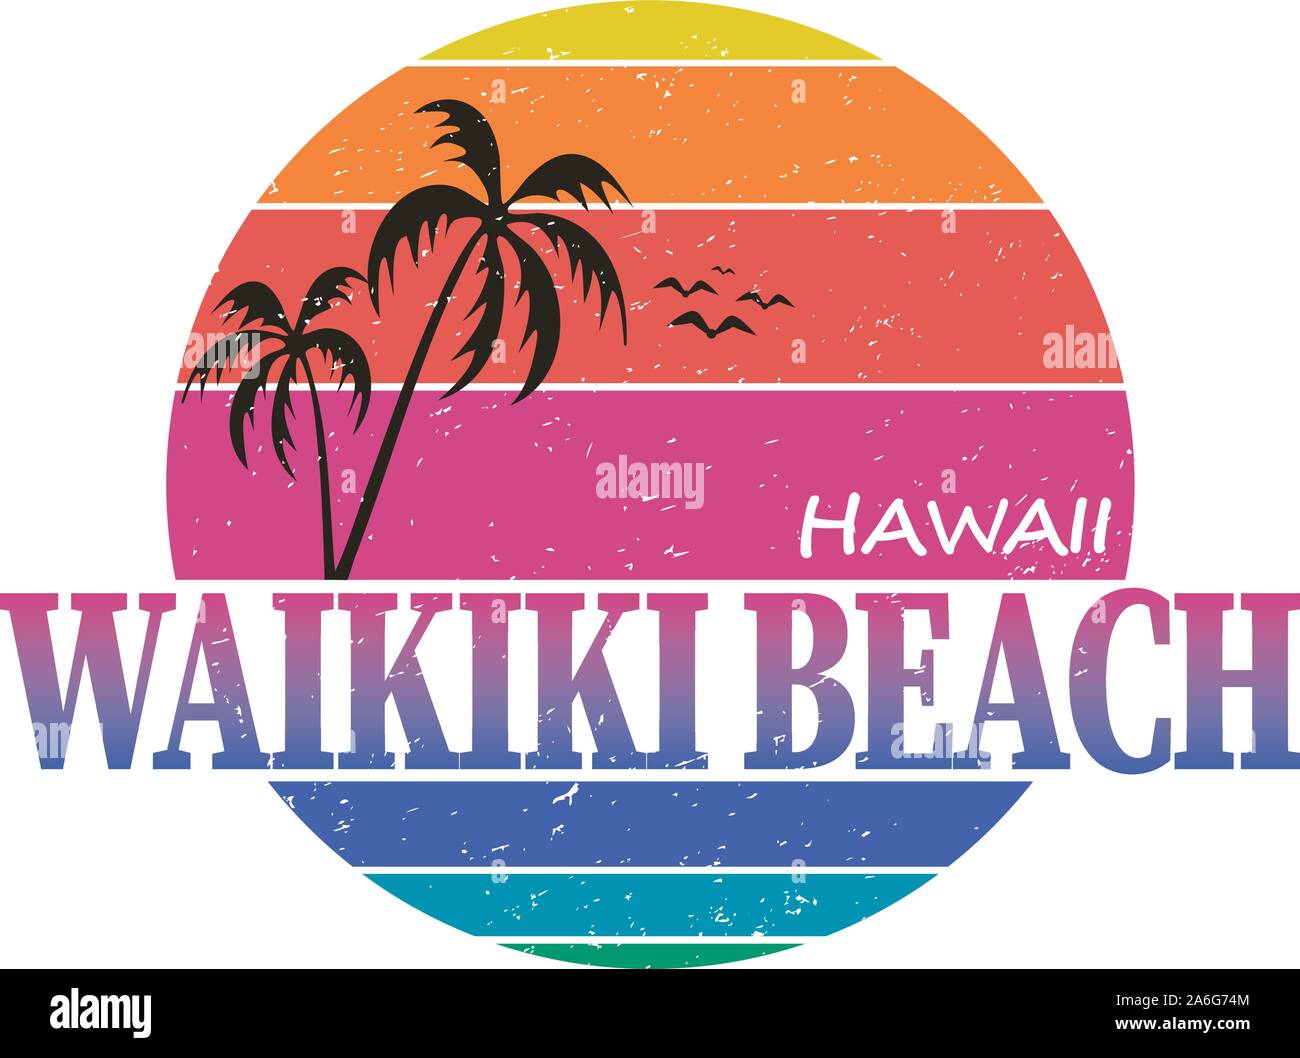 Waikiki beach hawaii vintage surf typography graphic design Stock Vector